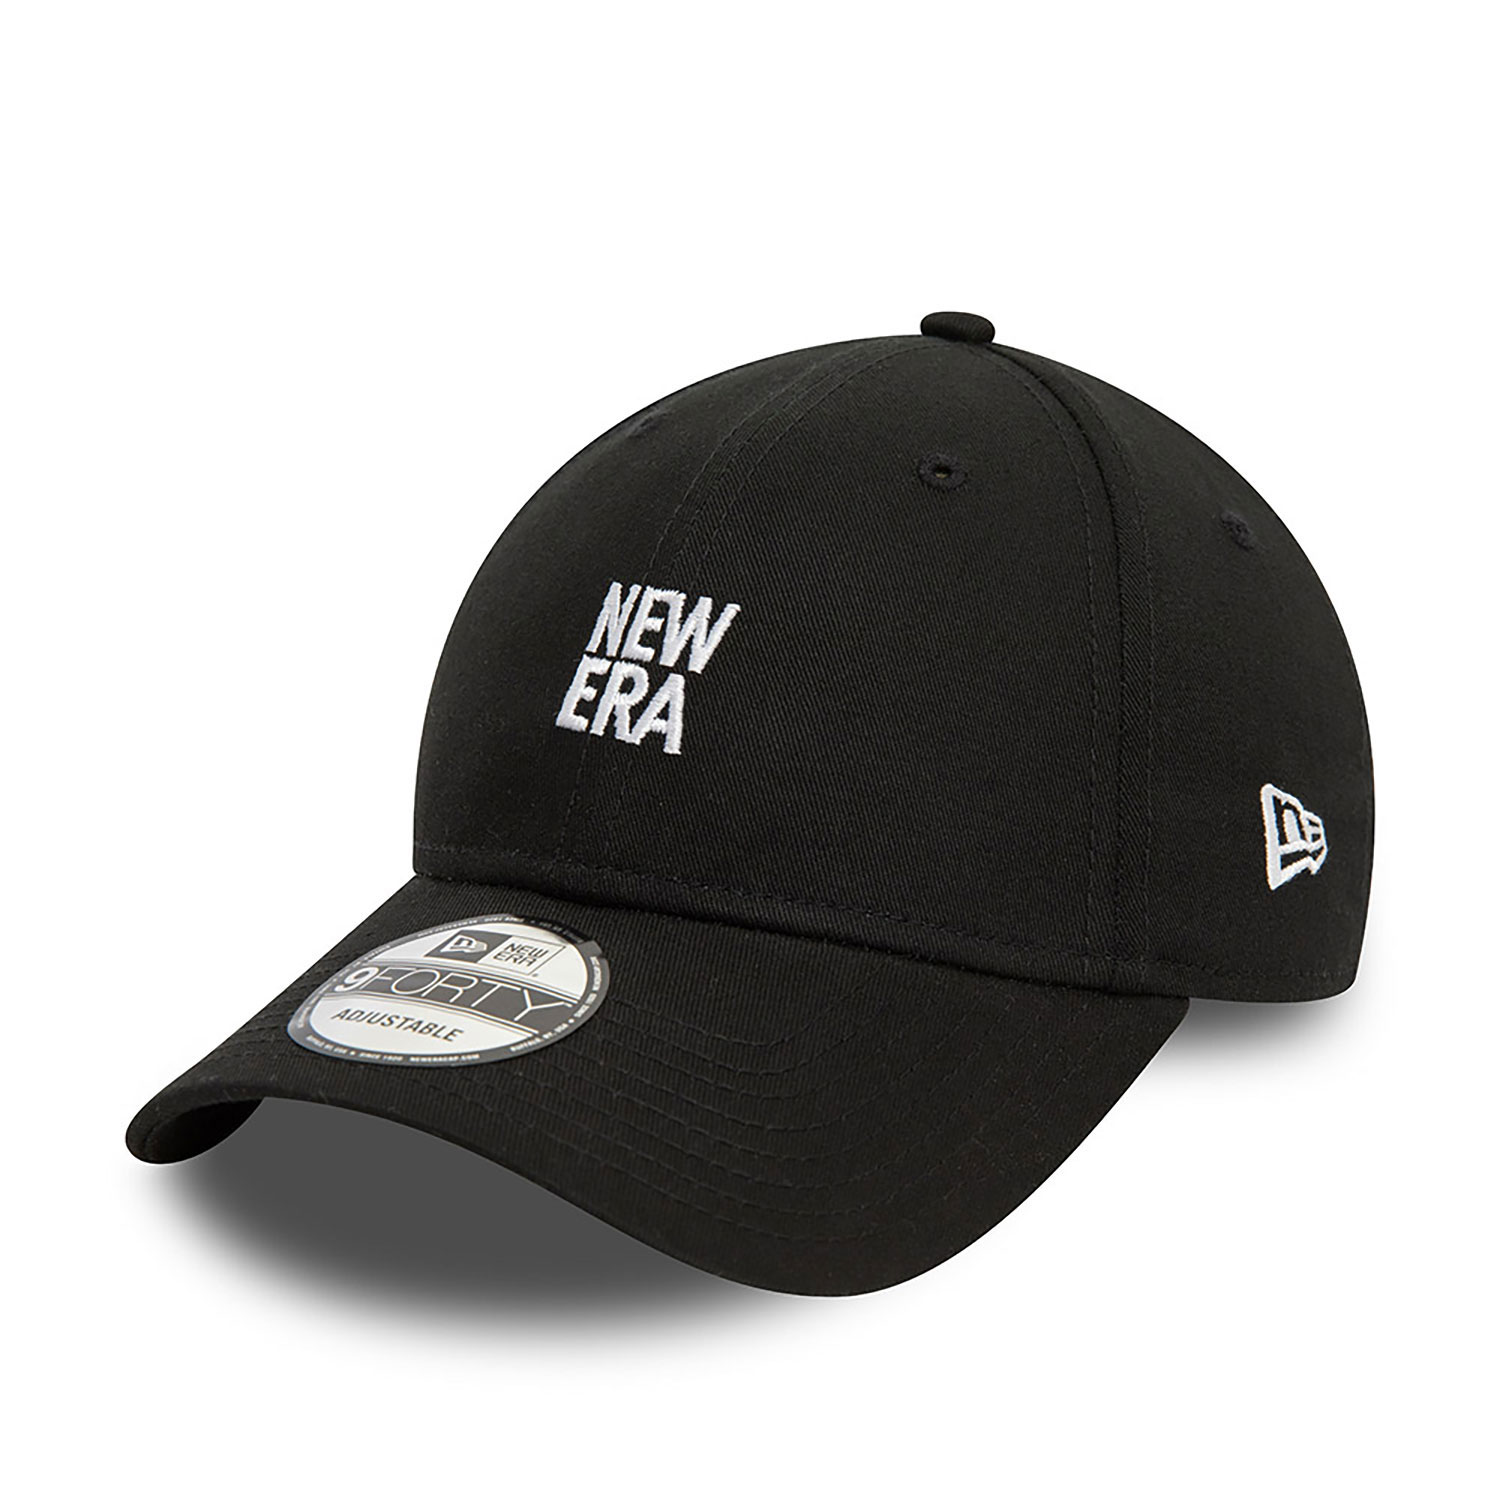 New Era Black 9FORTY Adjustable Cap